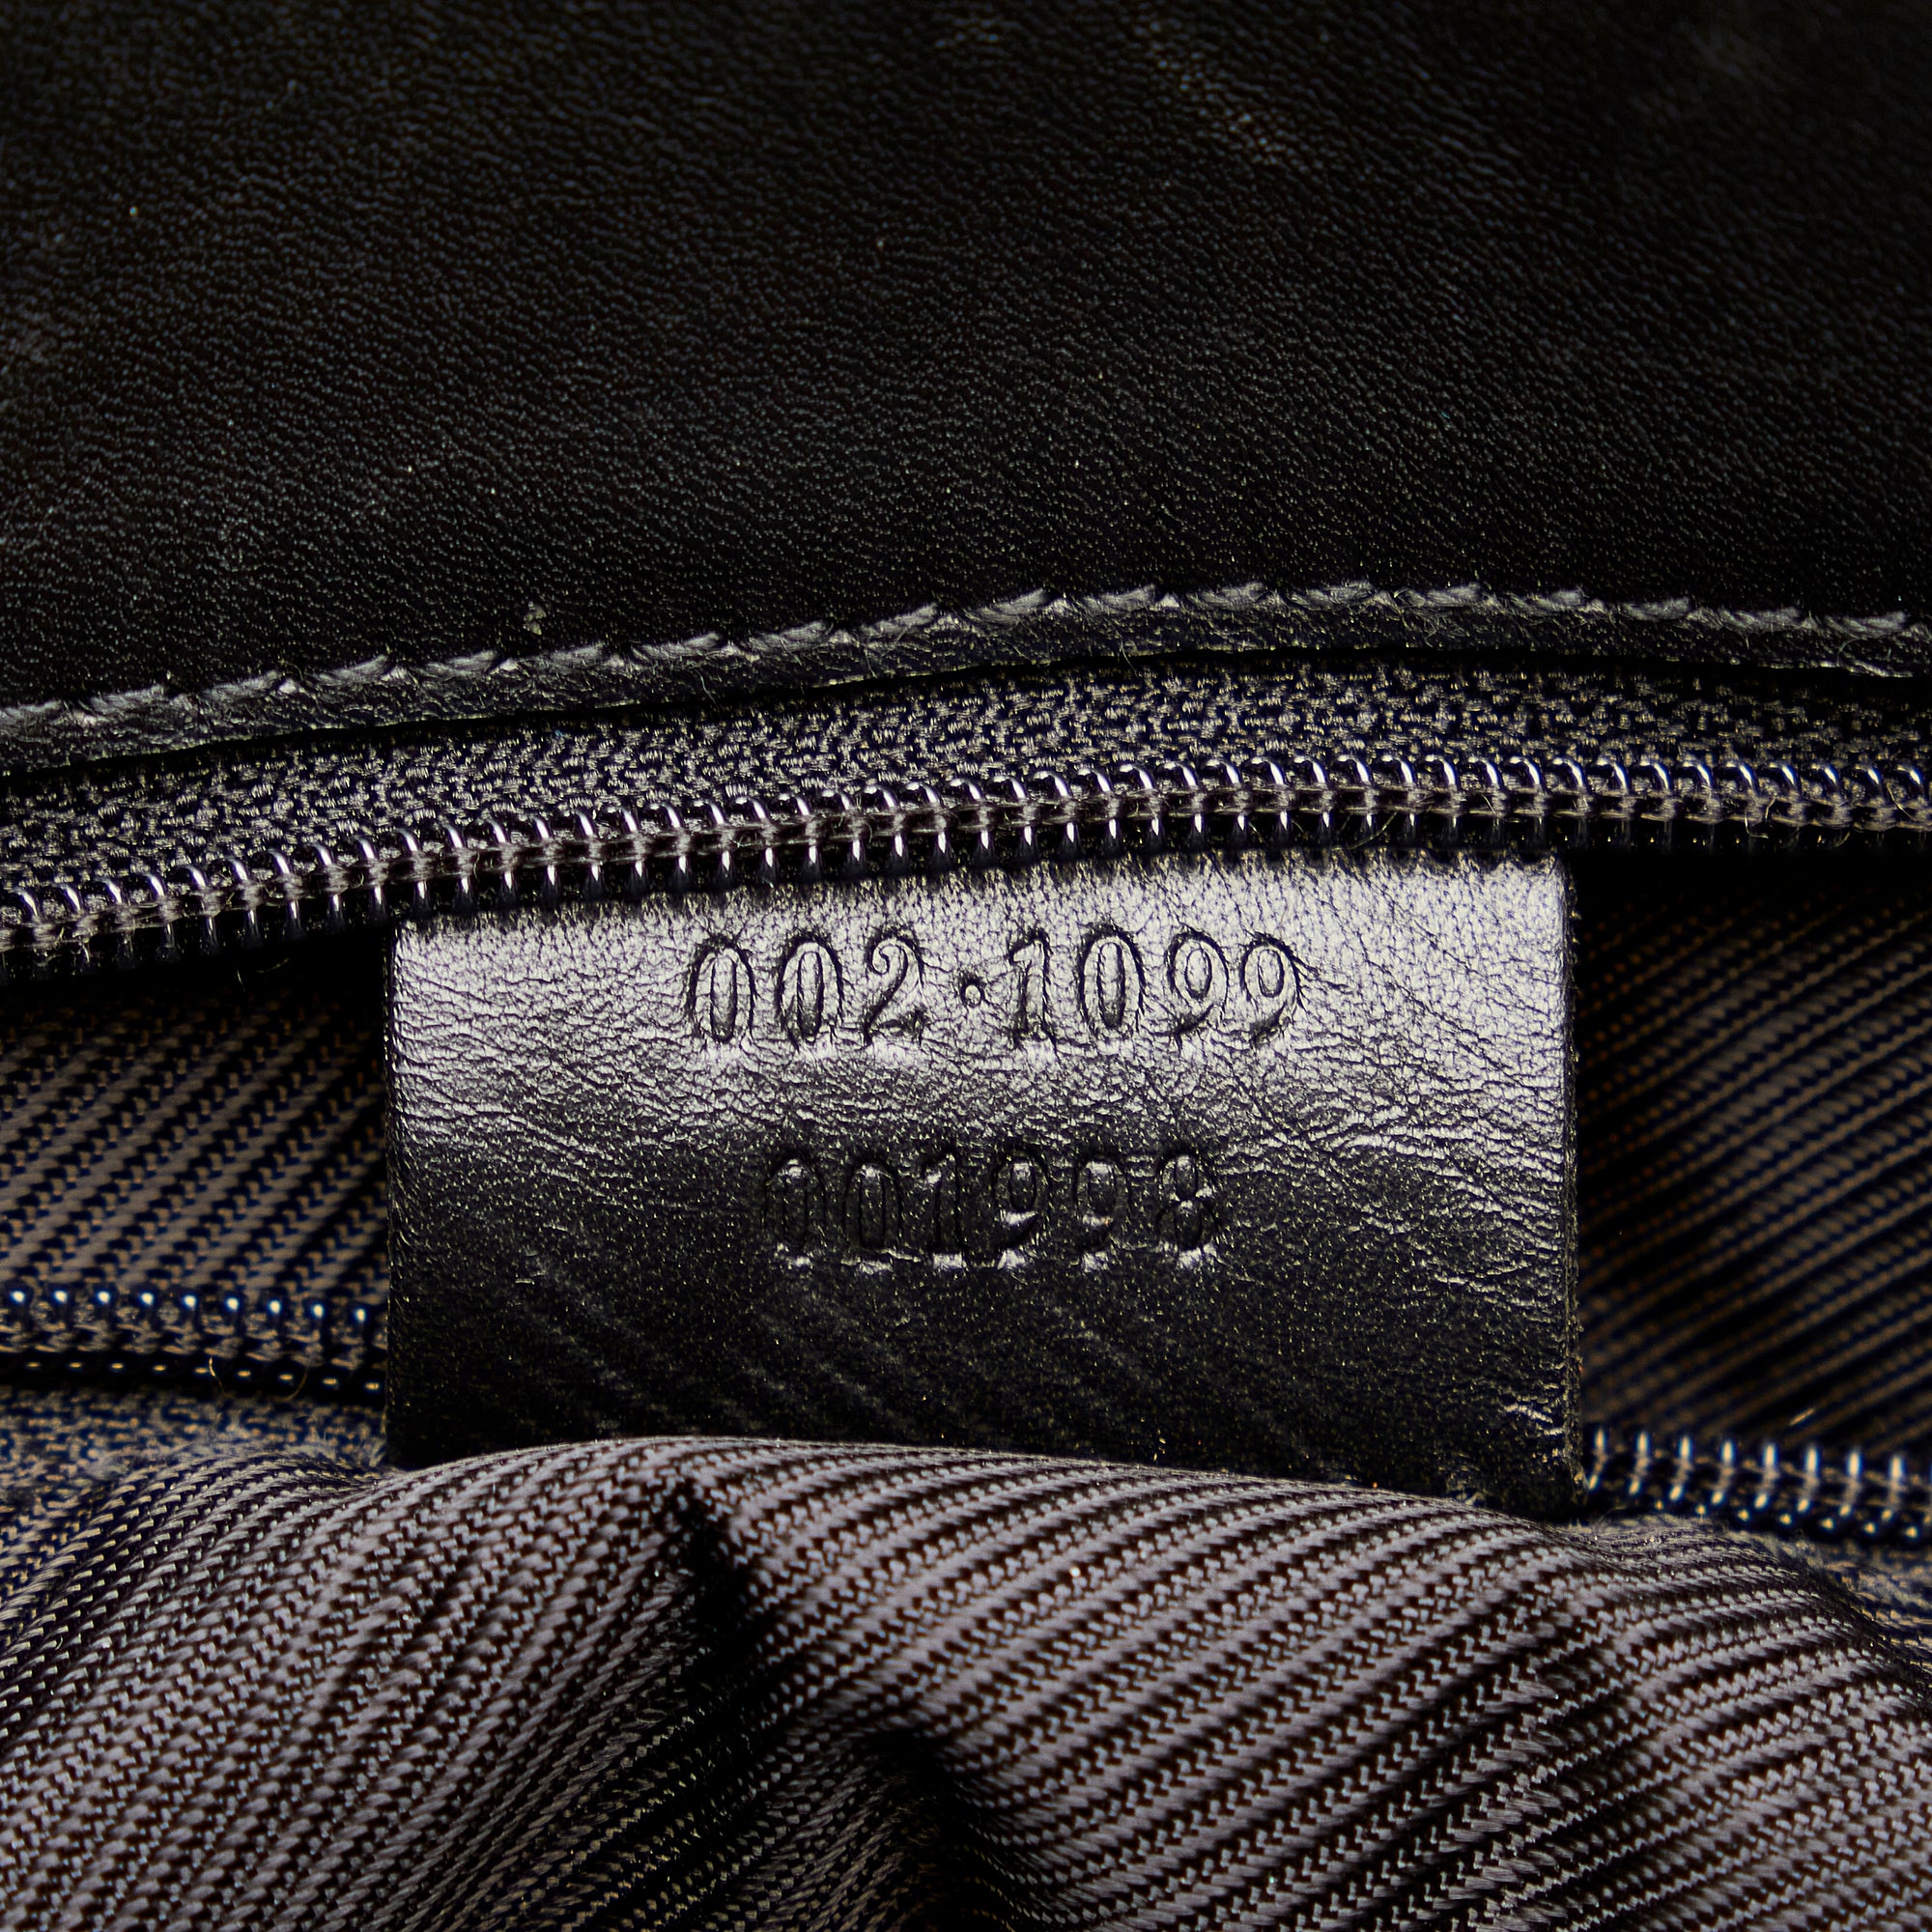 Red Gucci GG Canvas Tote Bag – Designer Revival